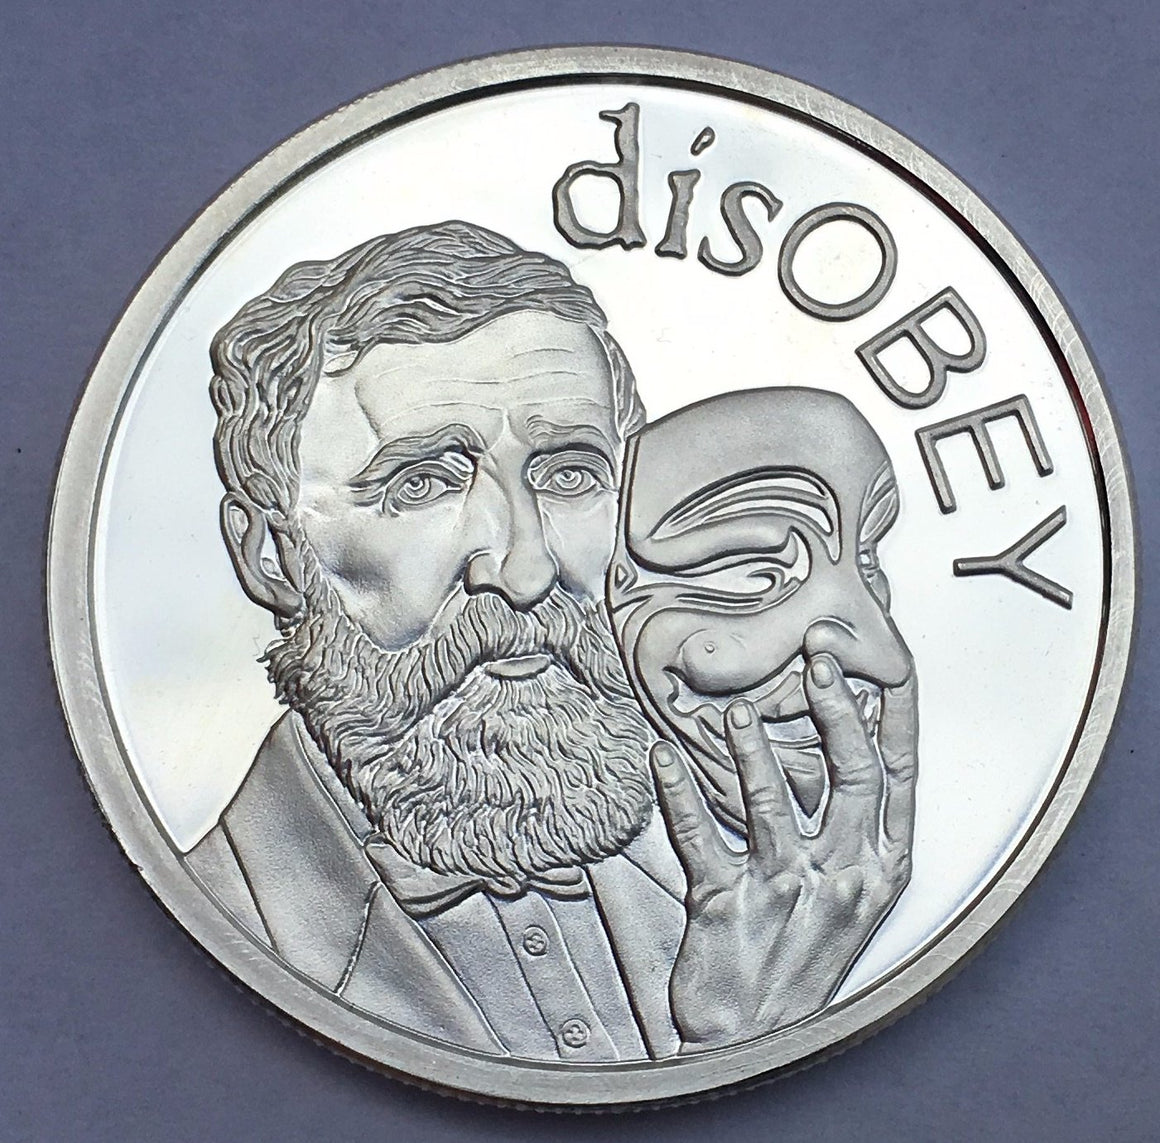 disOBEY Thoreau by Silver Shield, Mini Mintage - BU 1 oz .999 Silver Round